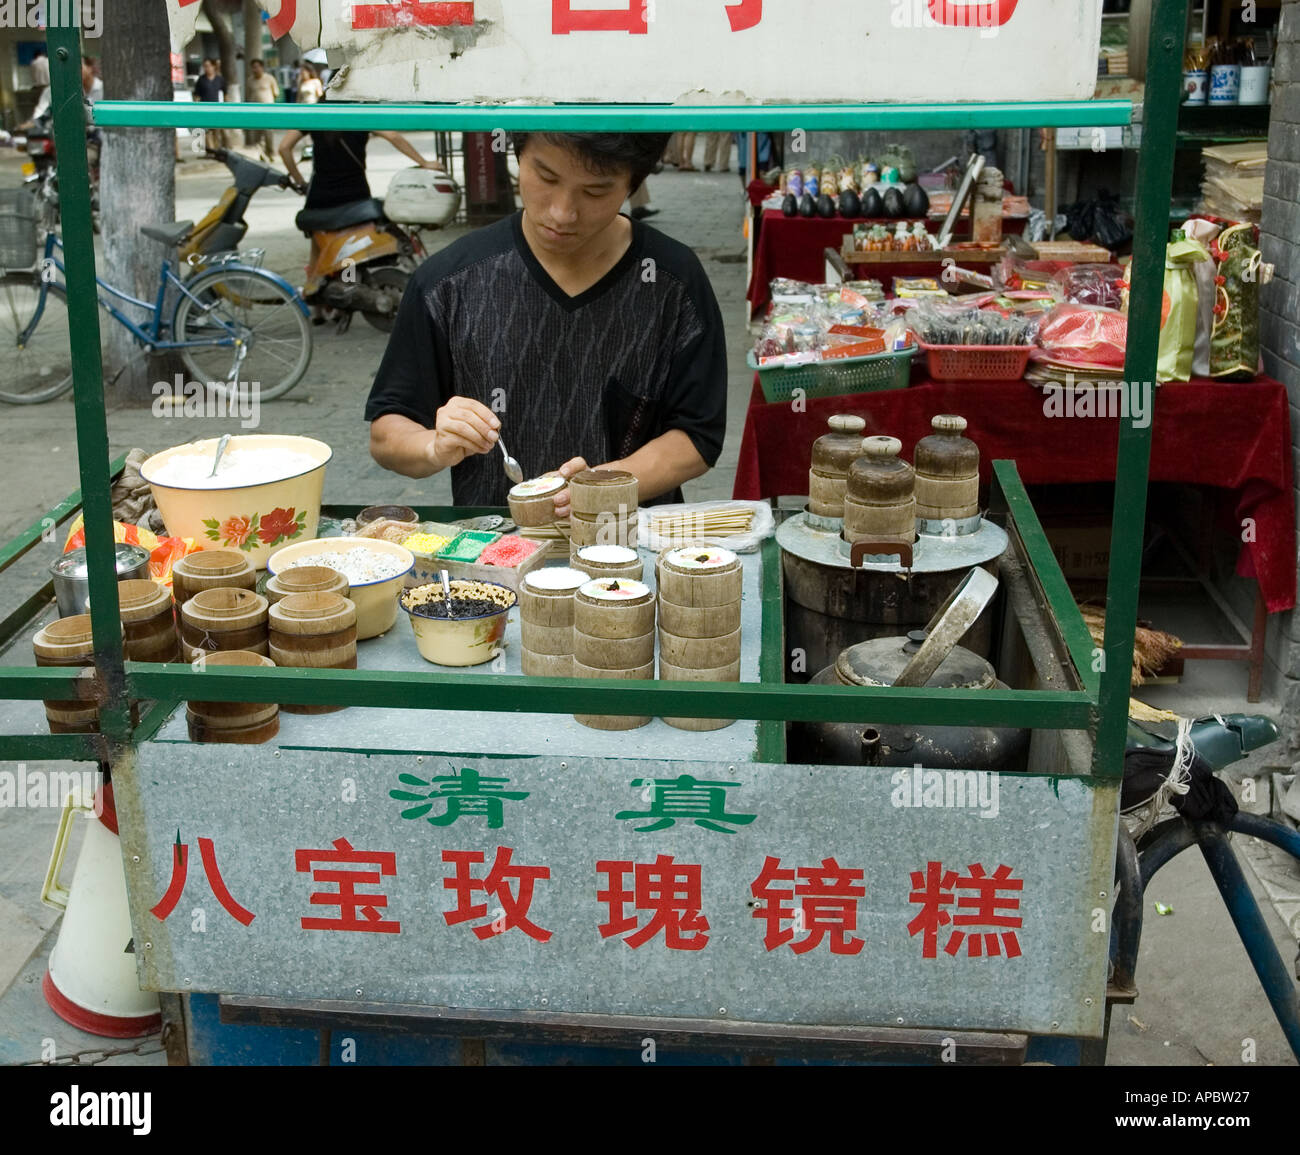 Street food stall in Beijing, China Stock Photo